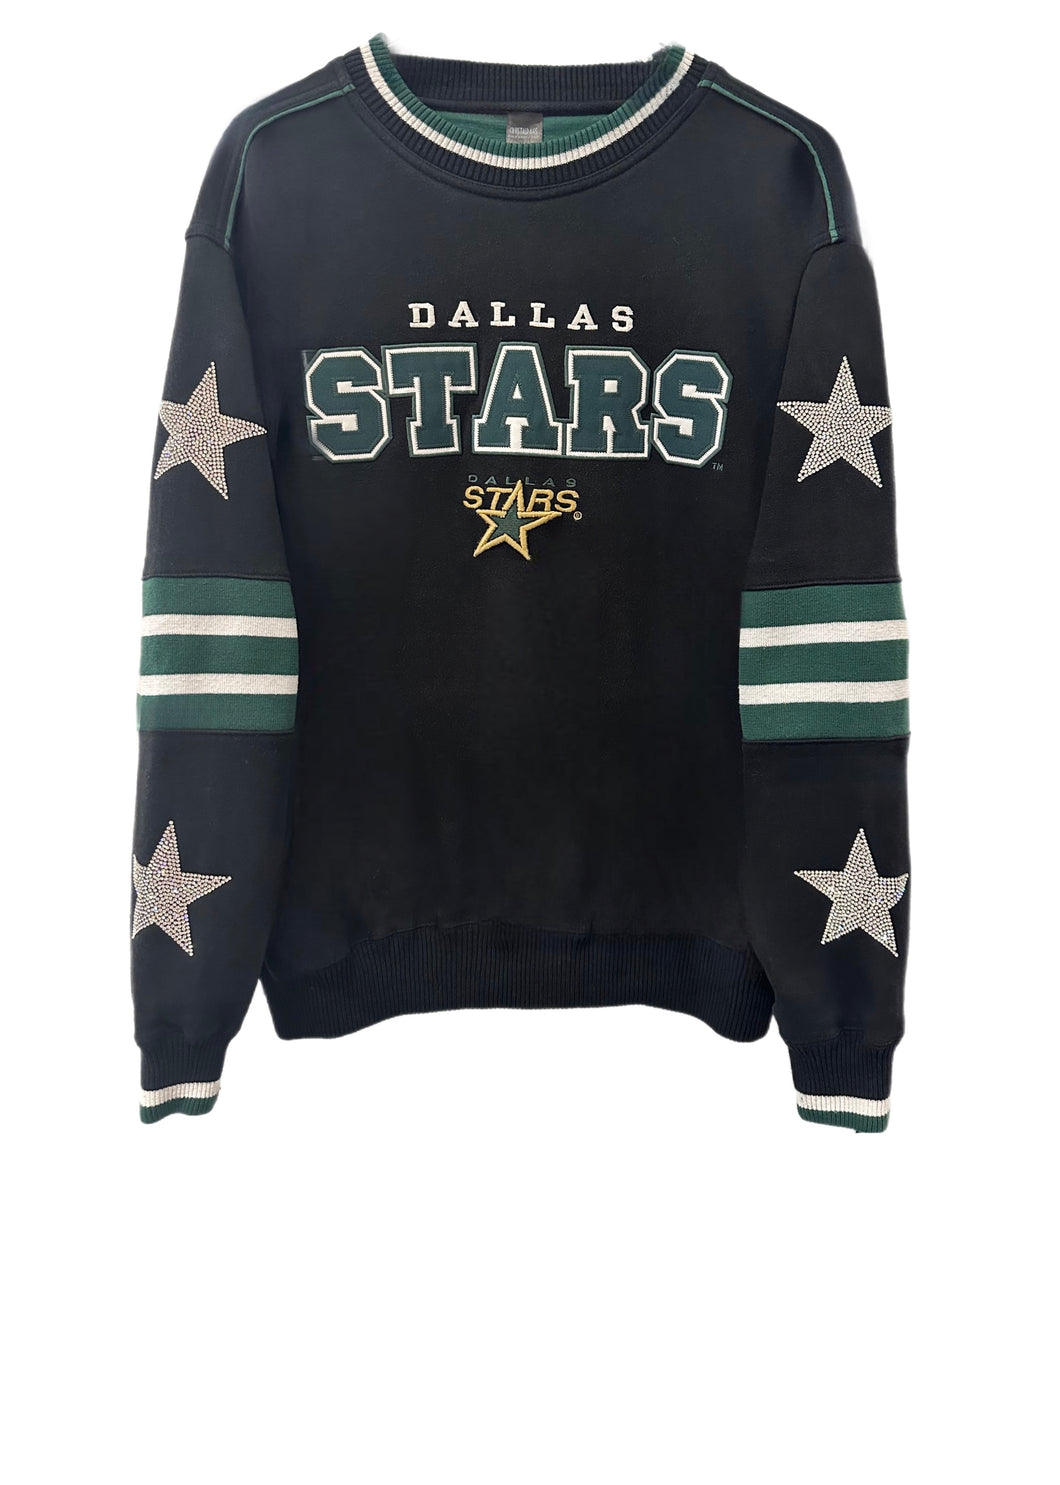 Dallas Stars, NHL One of a KIND Vintage Sweatshirt with Crystal Stars Design